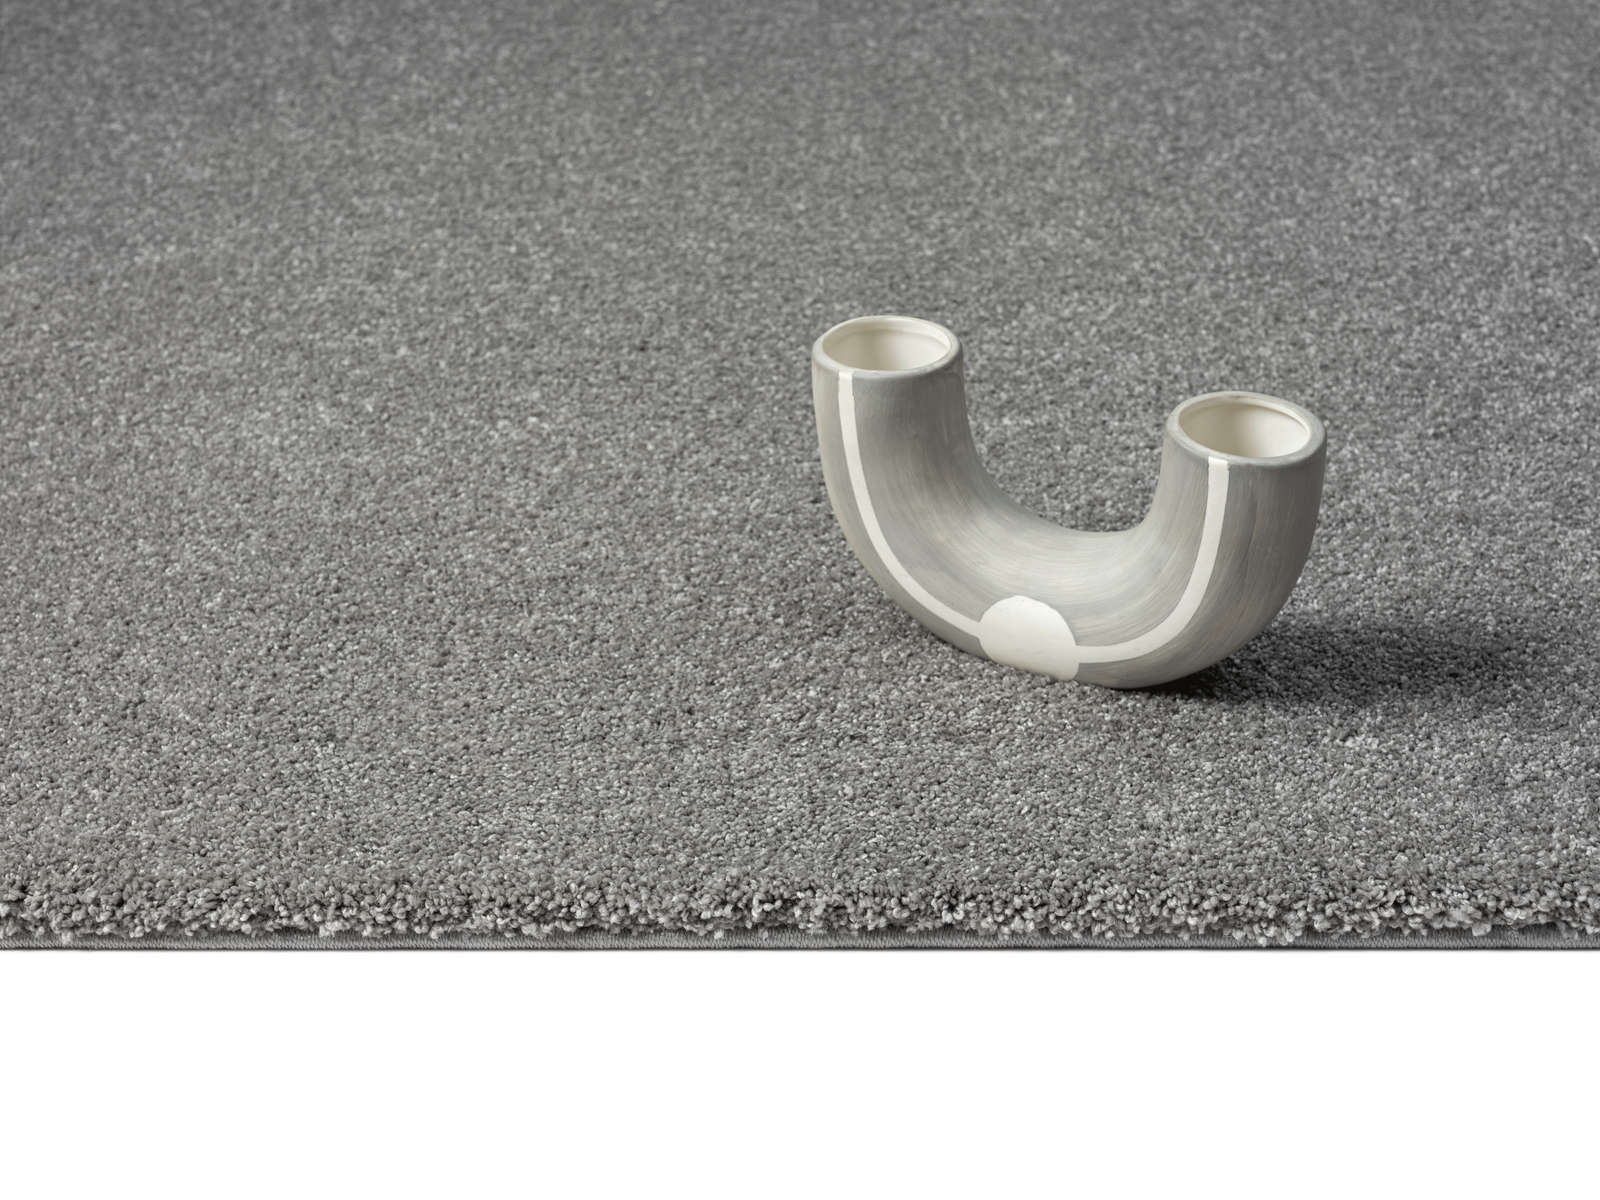             Fluffy short pile carpet in grey - 290 x 200 cm
        